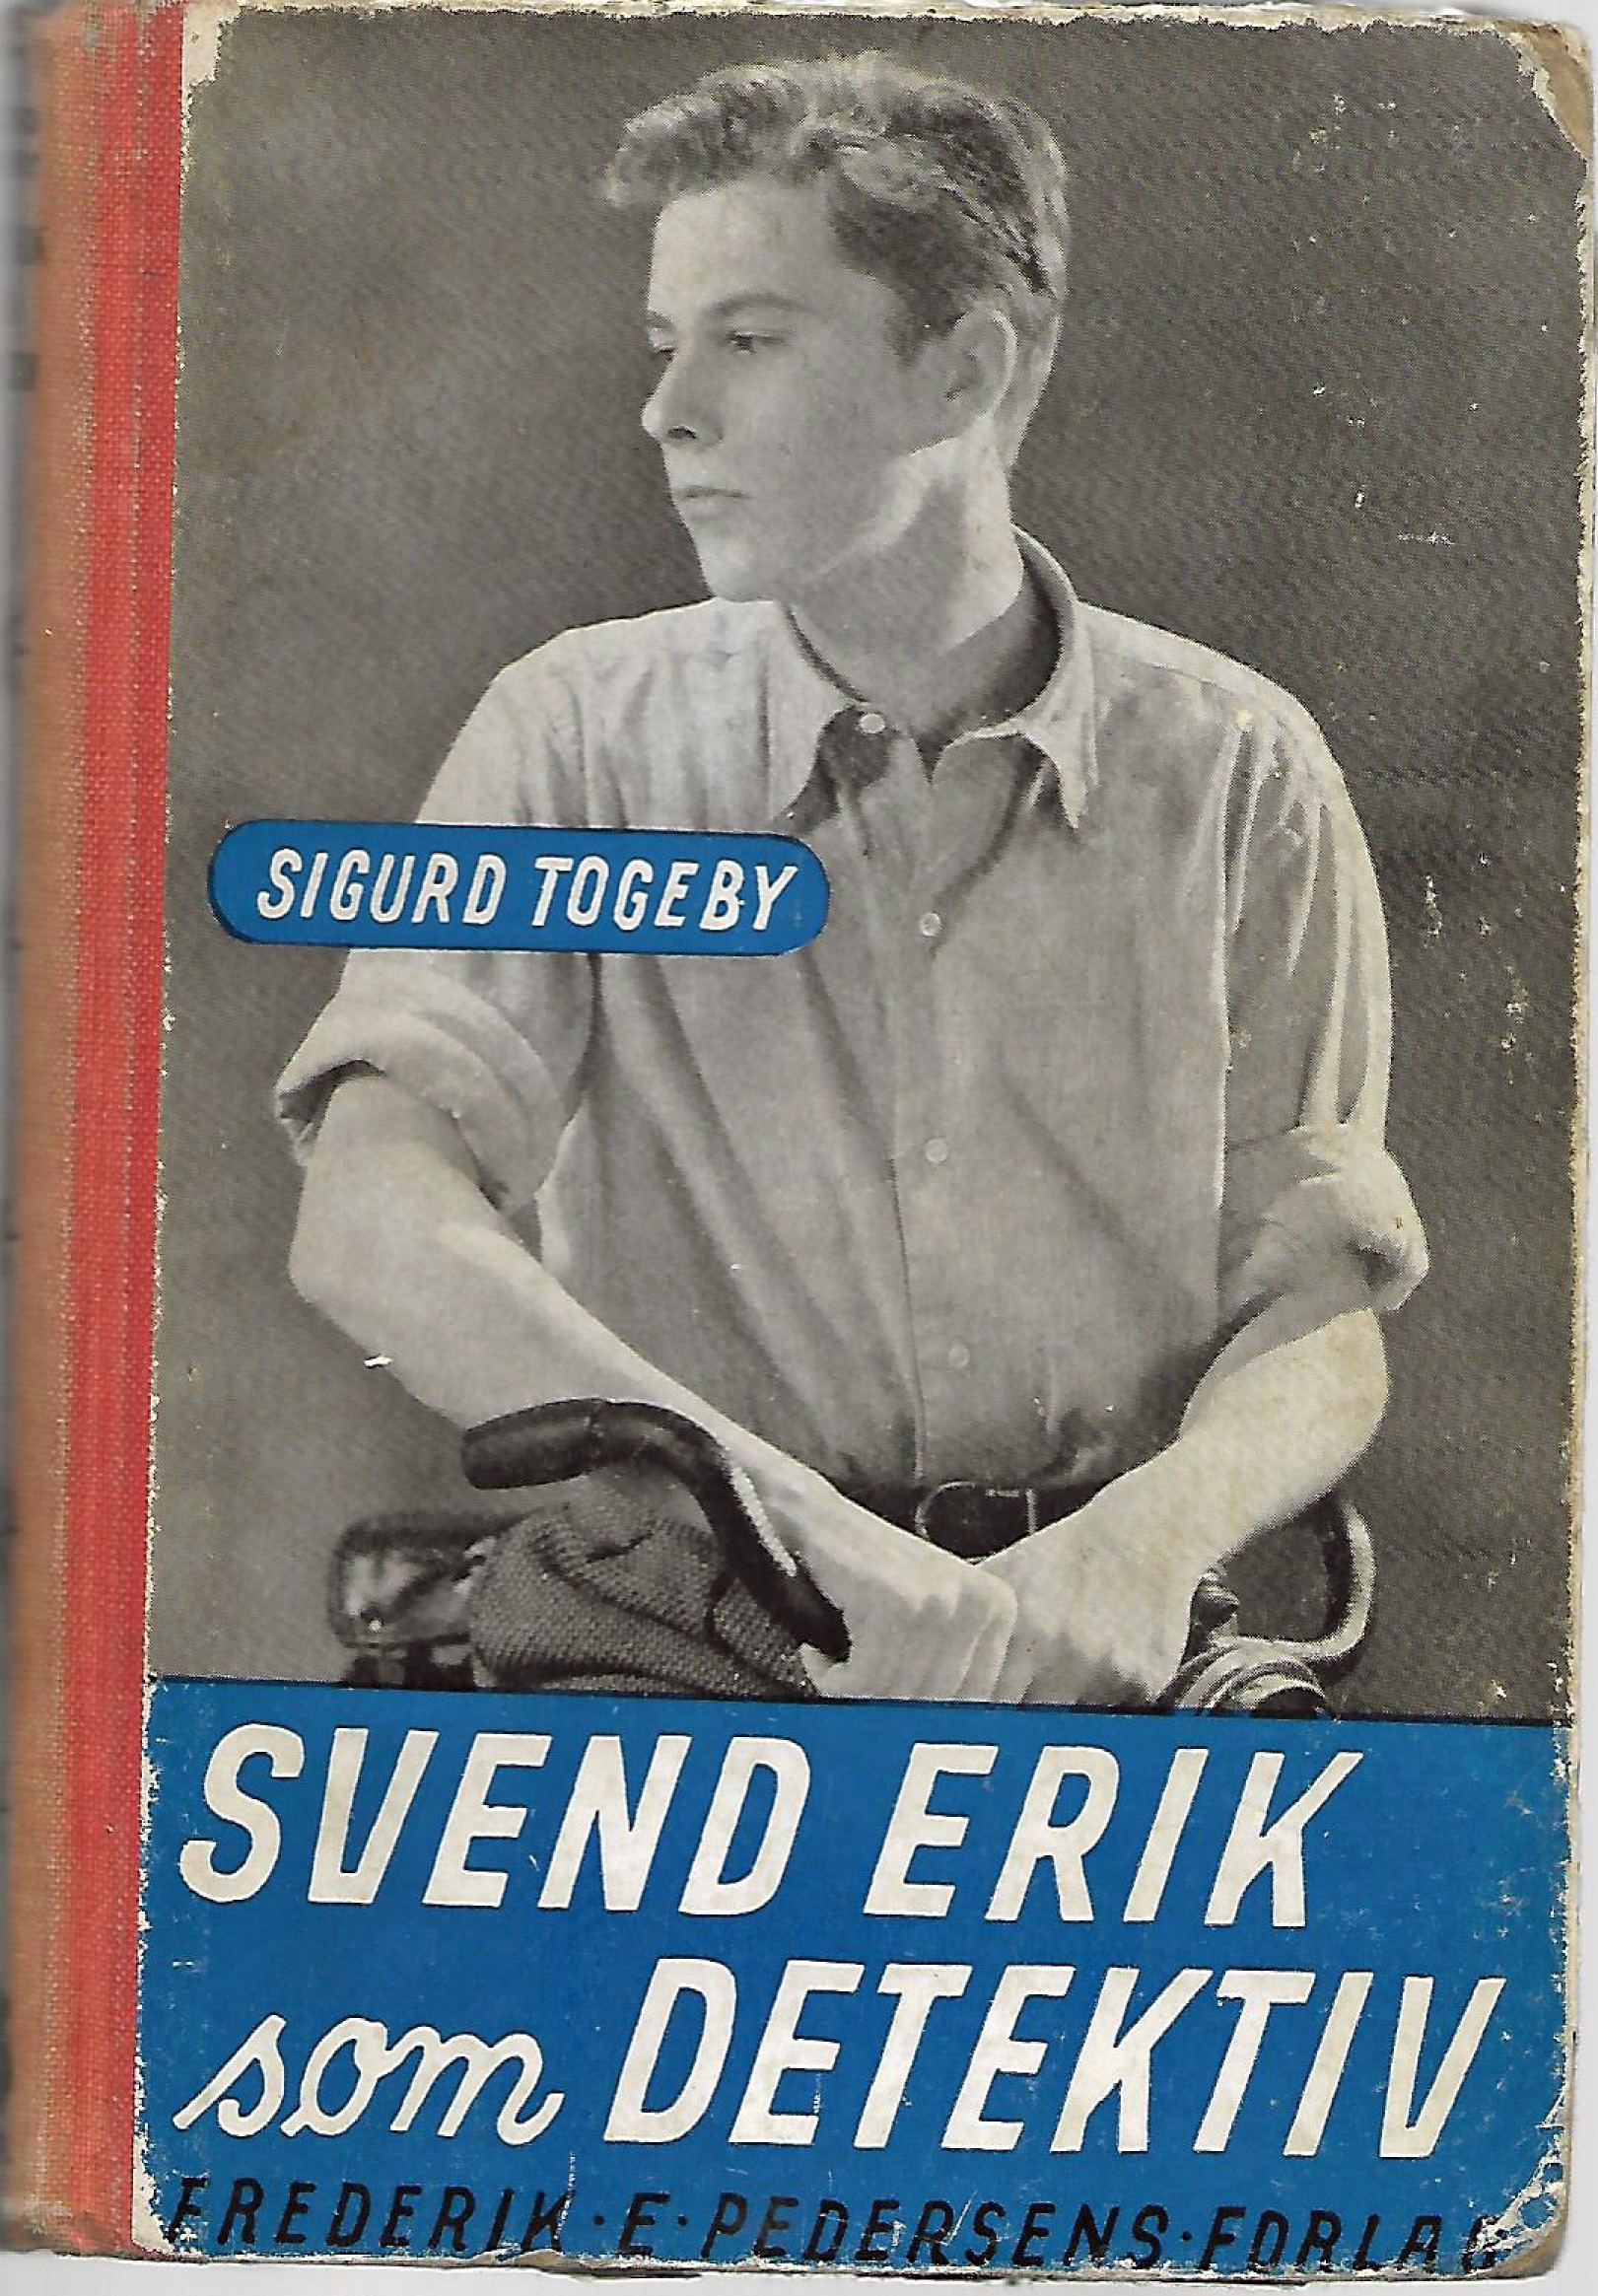 Svend Erik som Detektiv 1937 - Sigurd Togeby